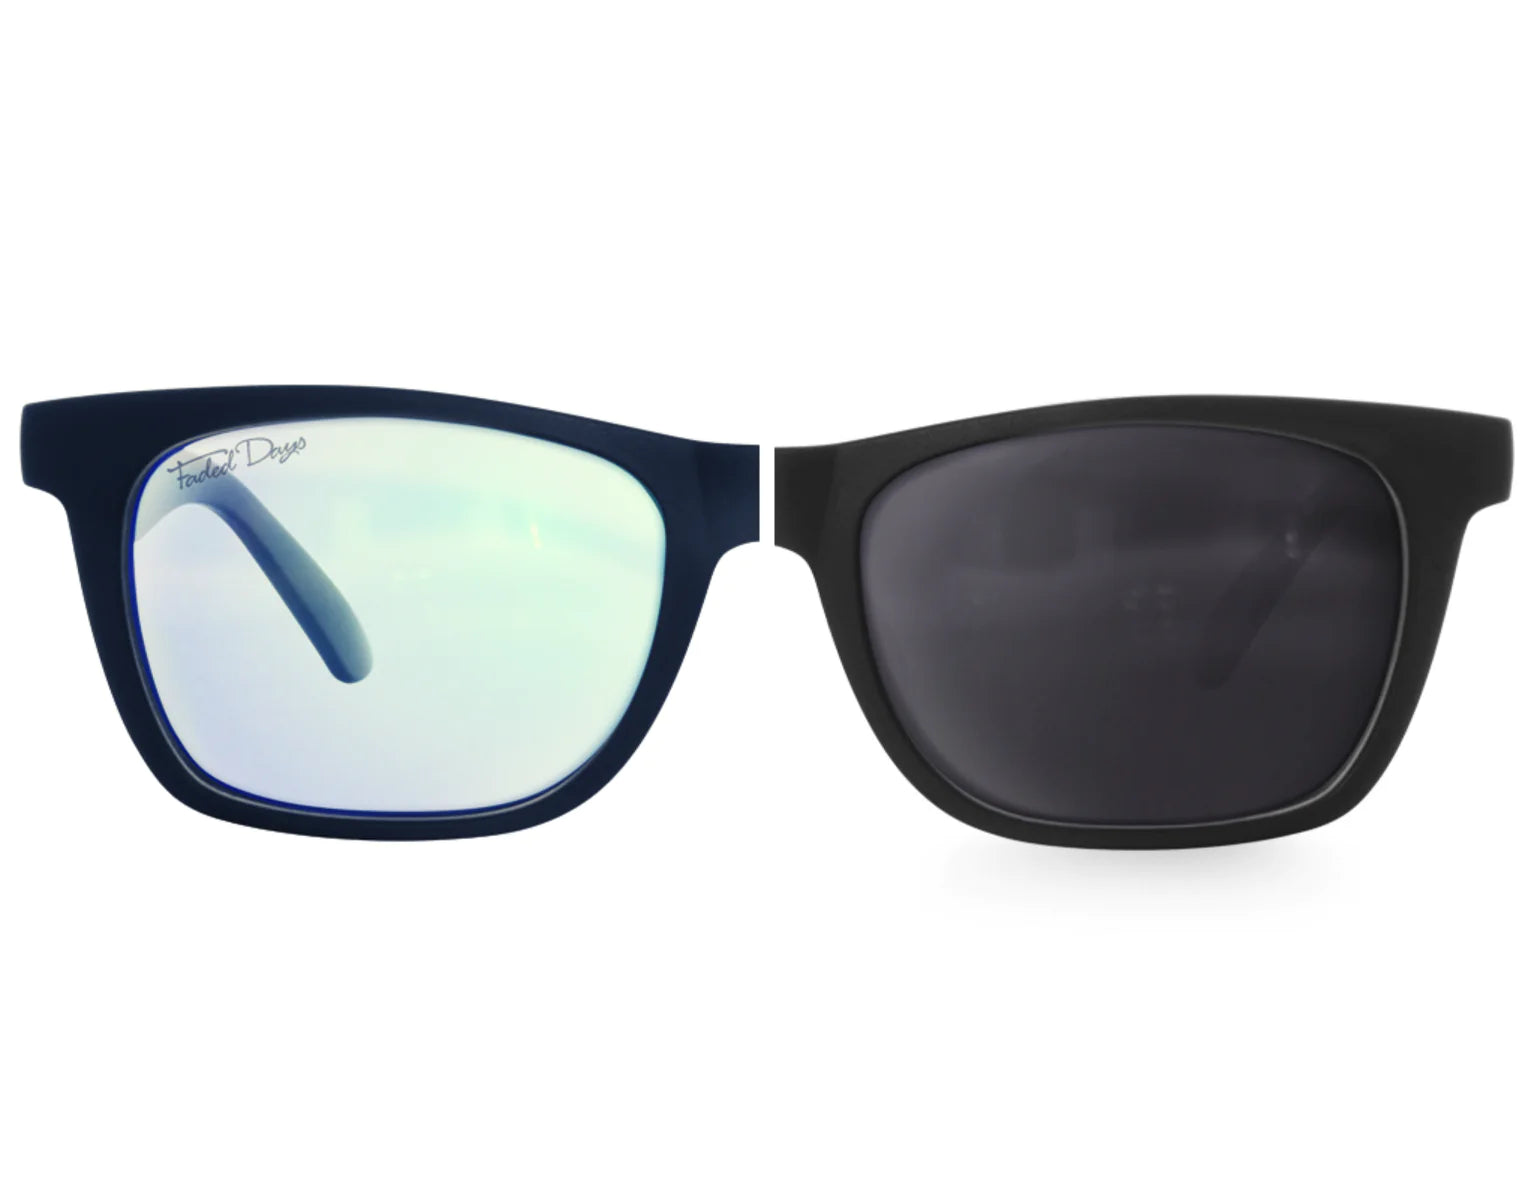 XXL Prescription Sunglasses/Glasses For Big Heads The Gent (165mm) Black